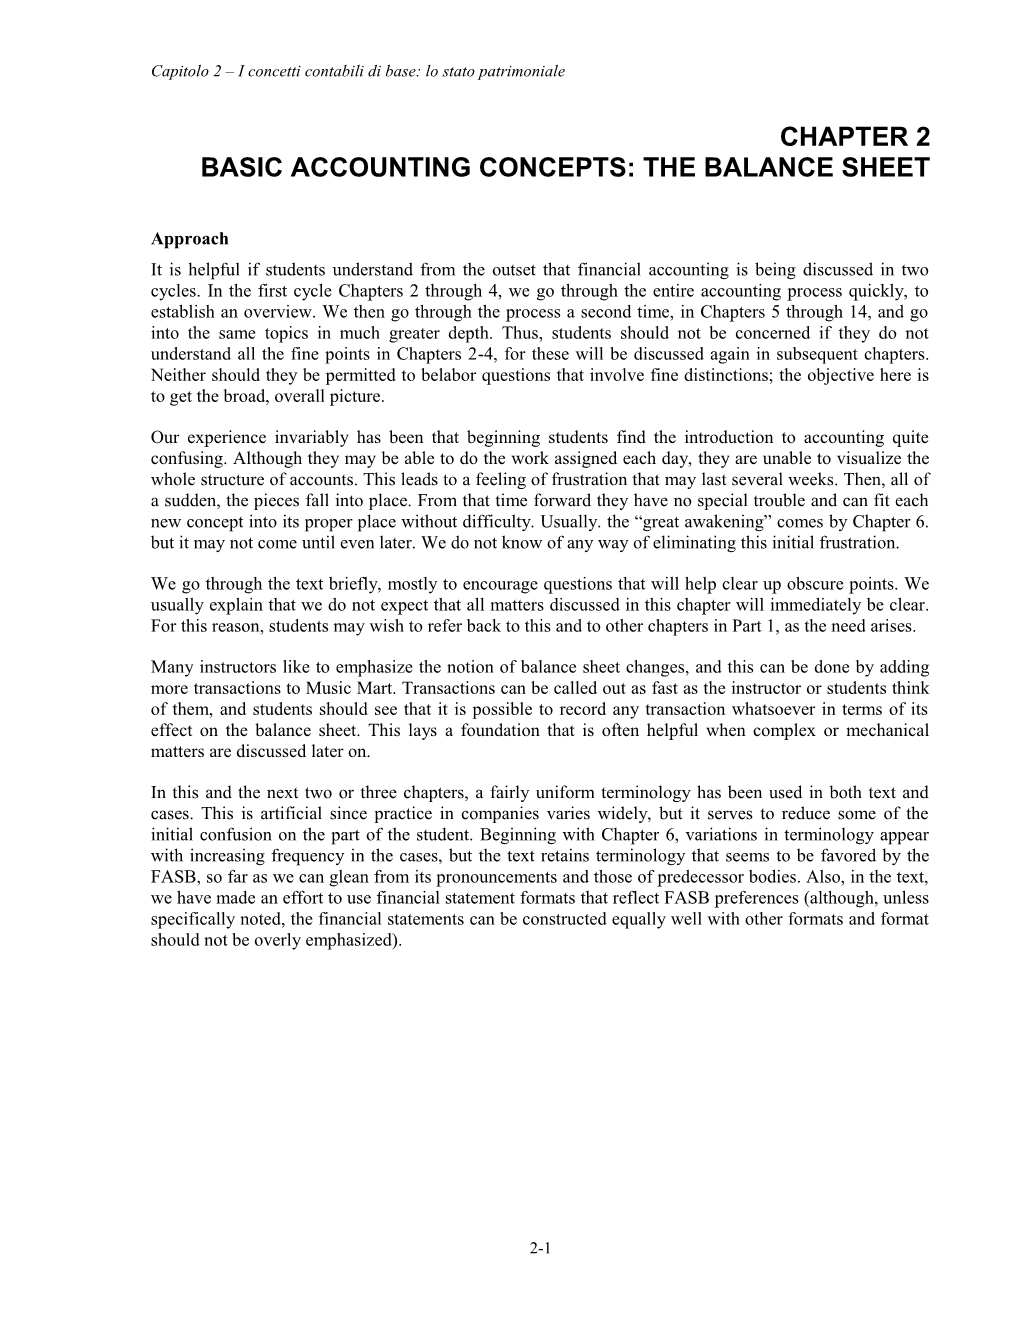 Basic Accounting Concepts: the Balance Sheet